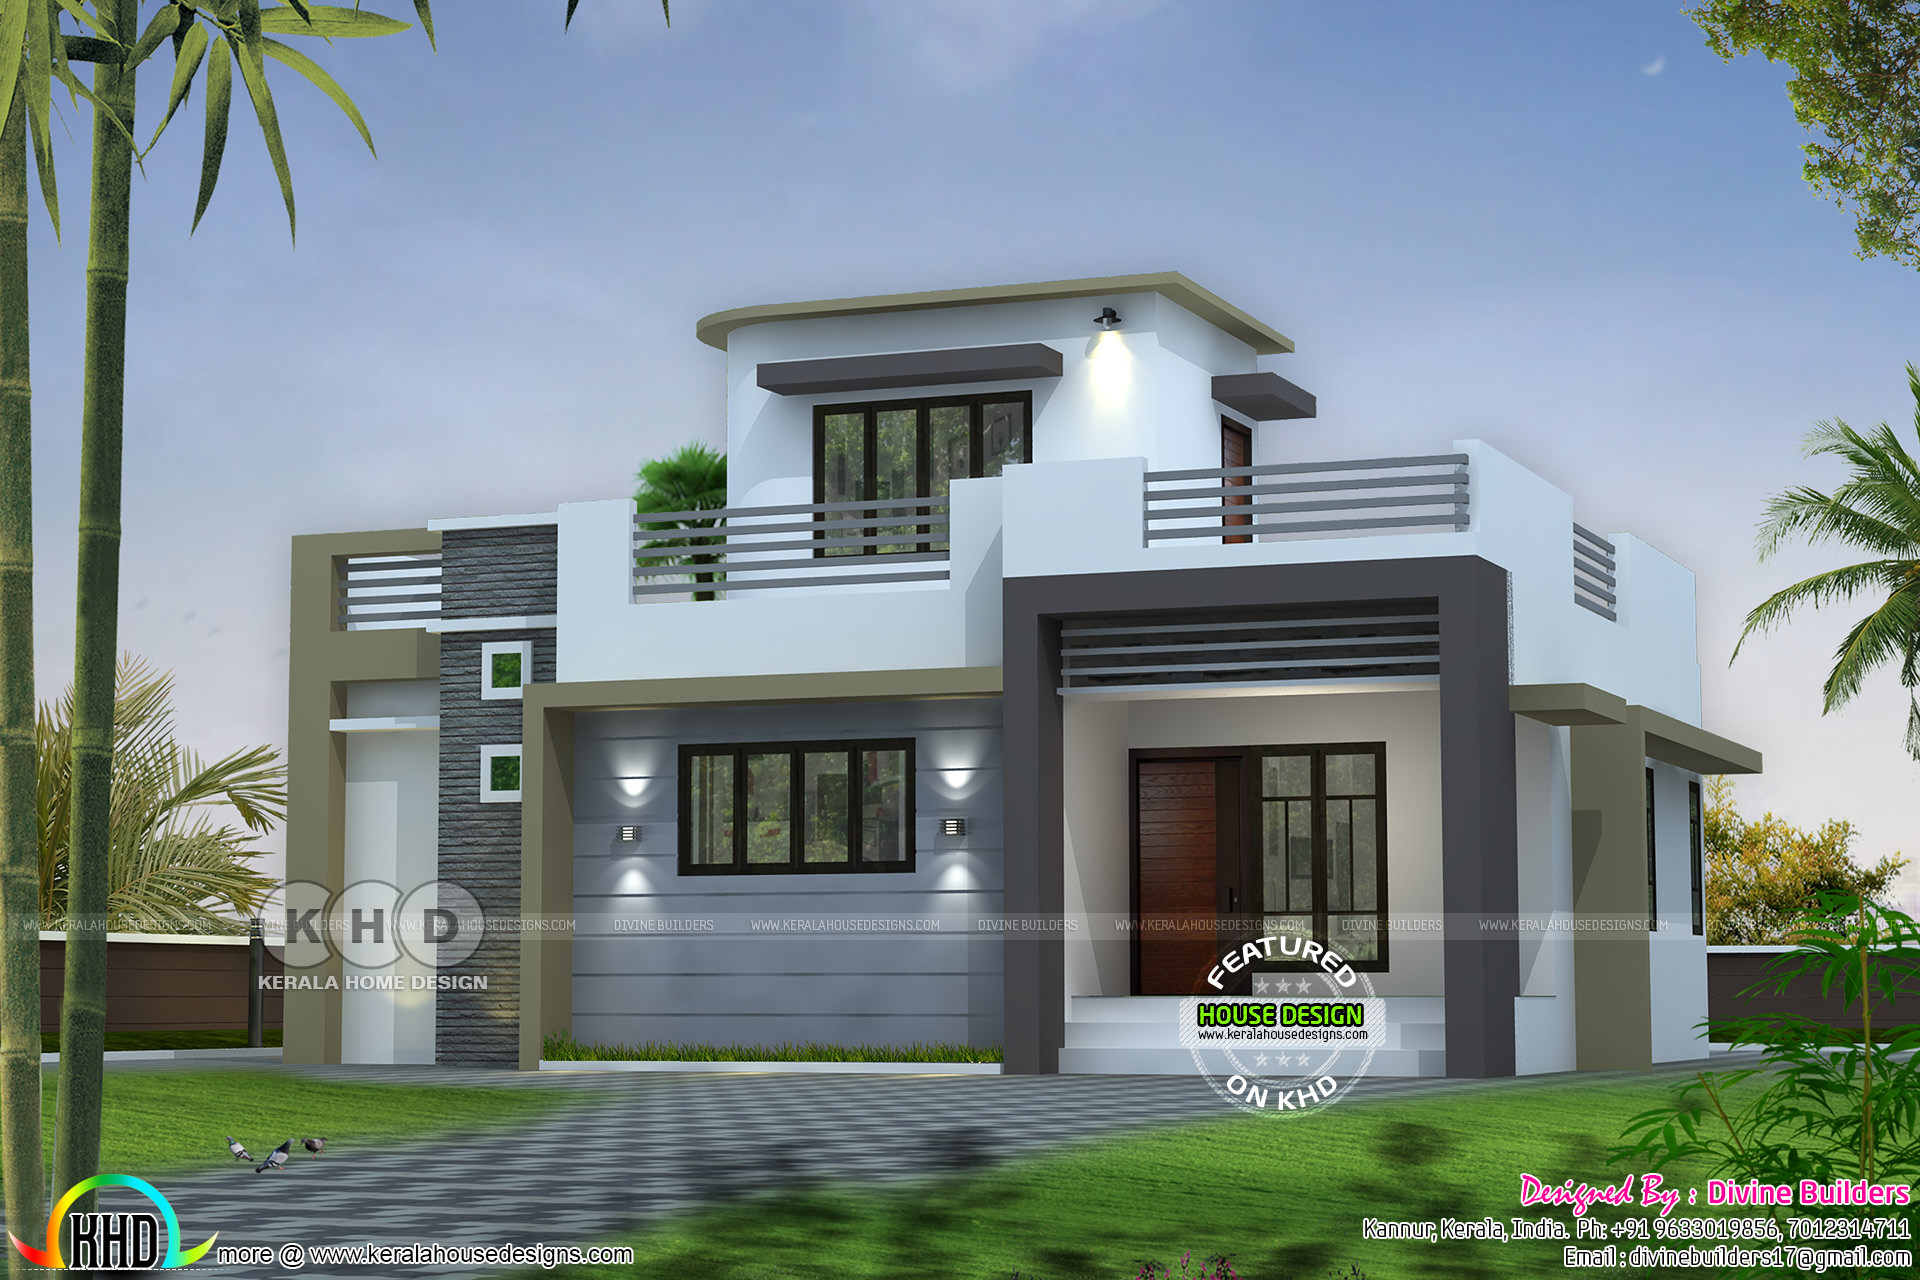  20 Lakhs  cost estimated 1227 square feet house  Kerala  